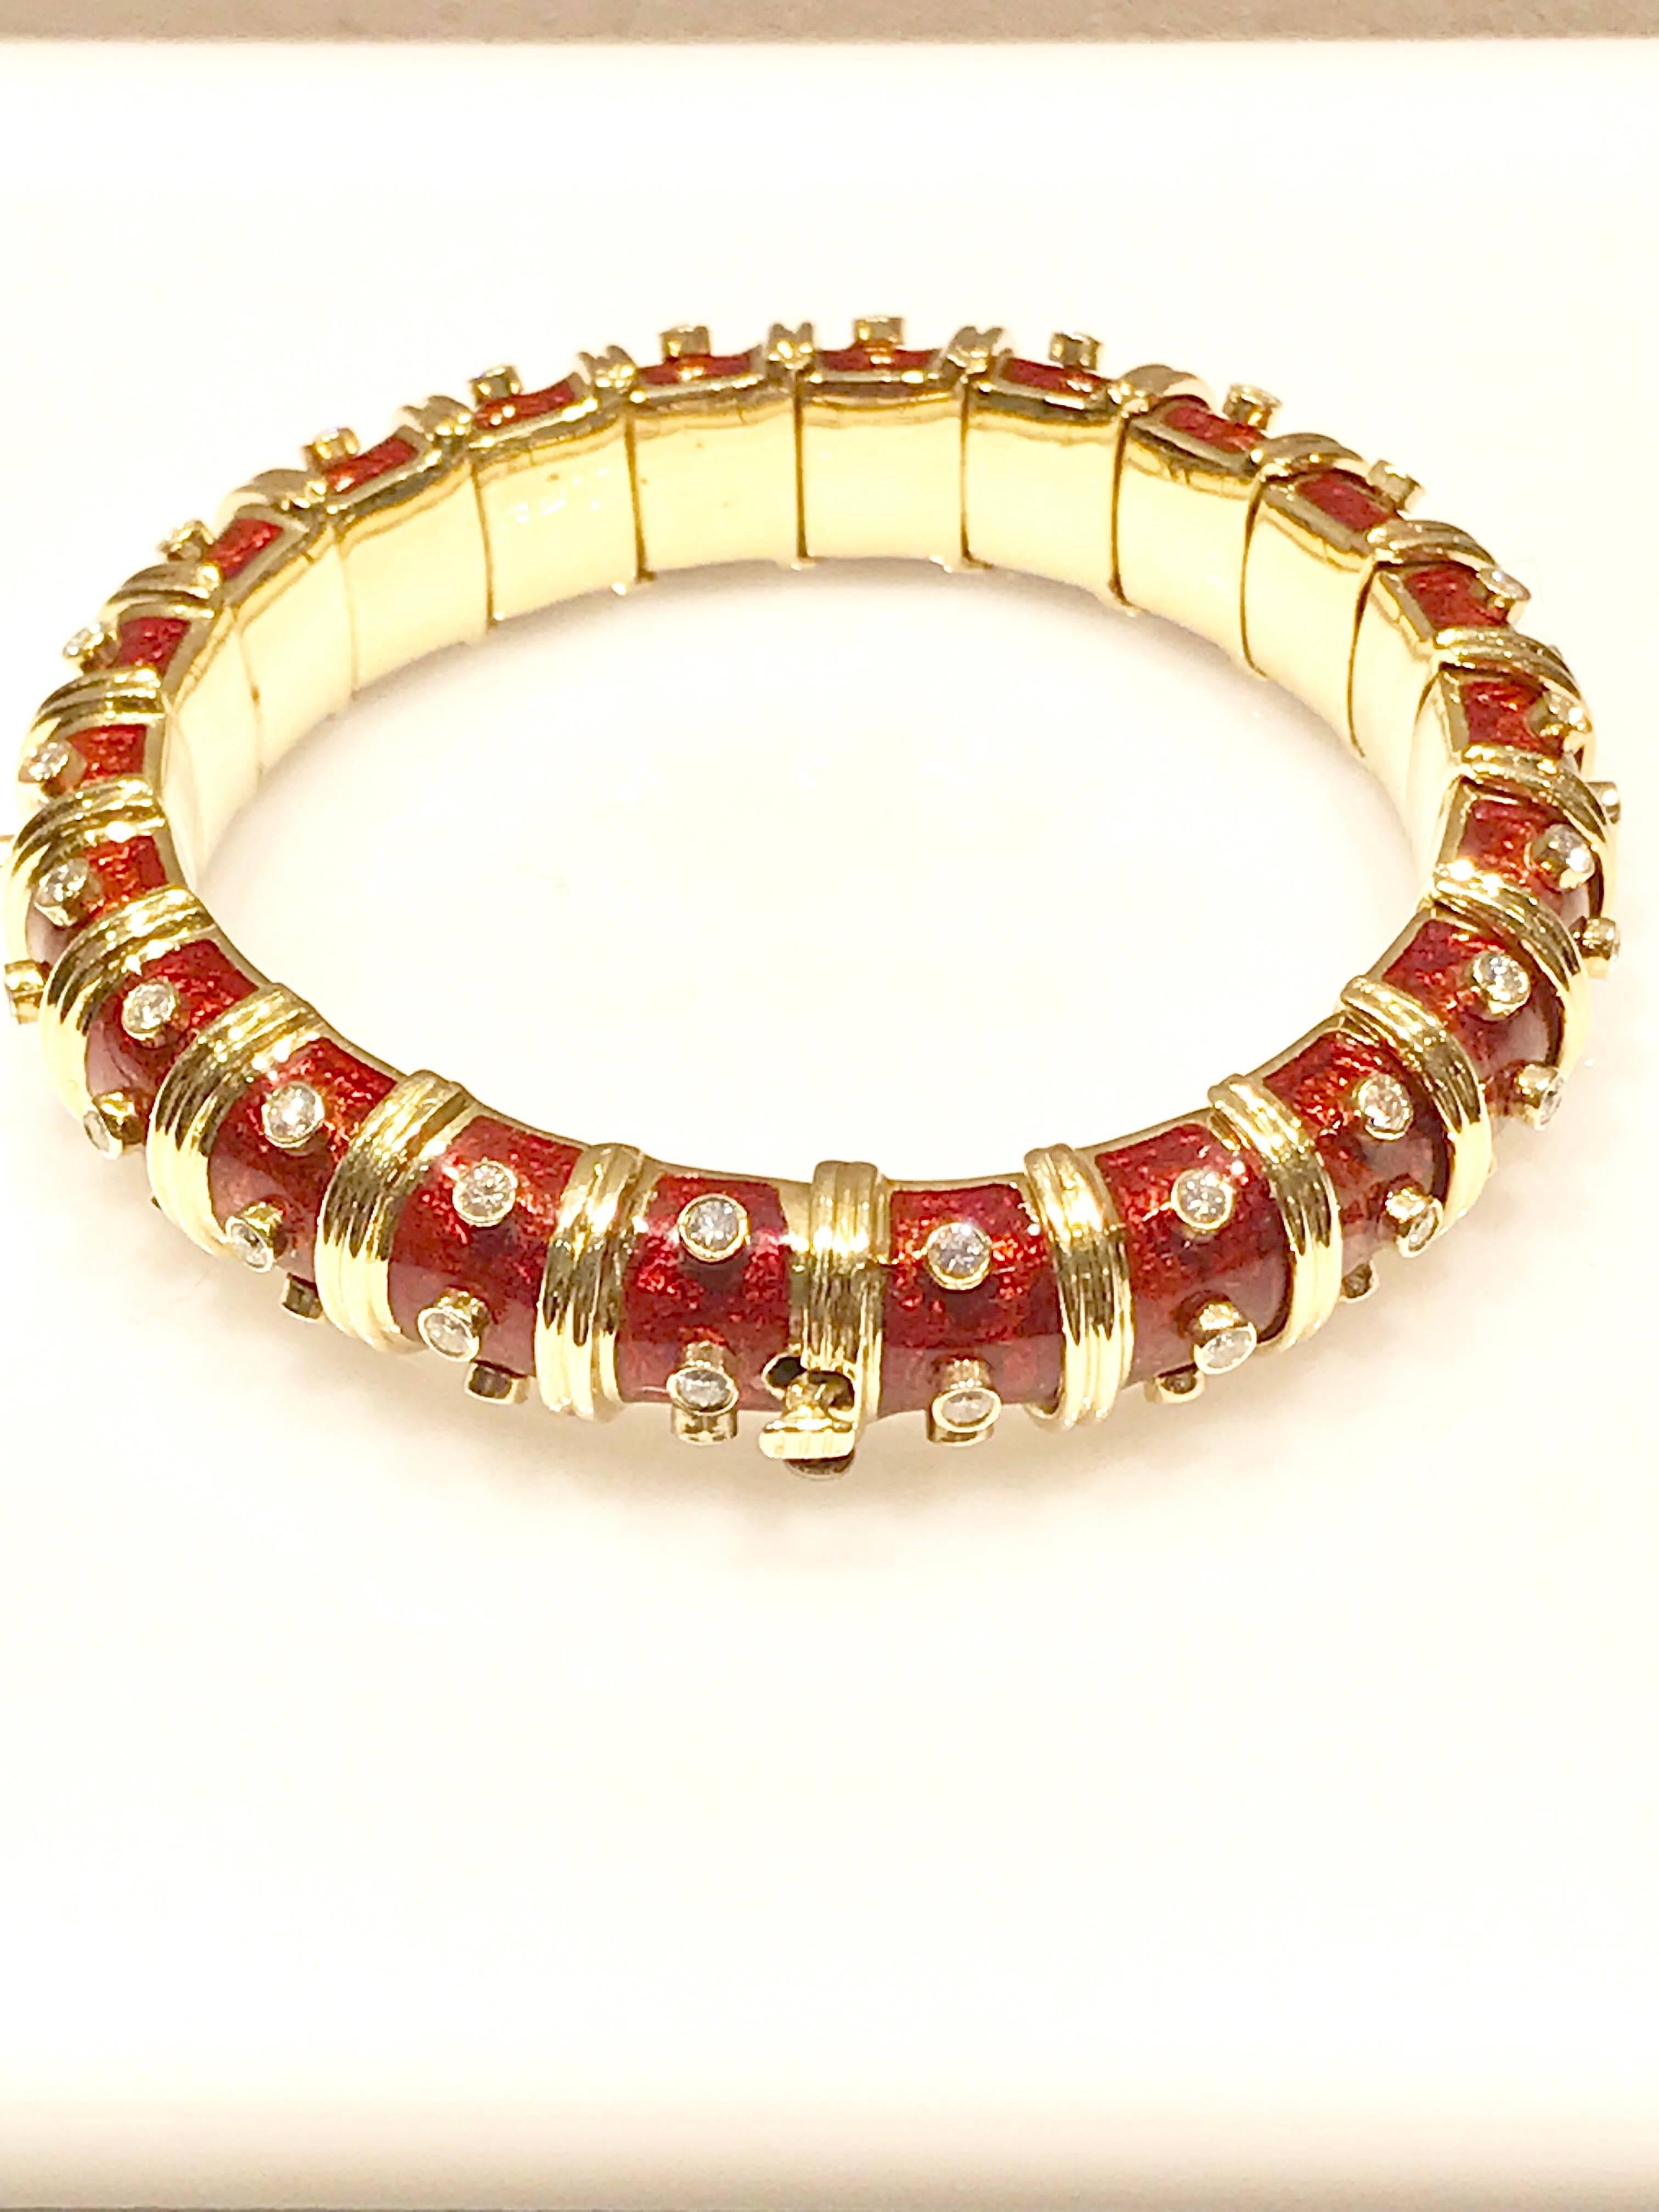 Schlumberger for Tiffany & Co 18 Karat Yellow Gold, Enamel and Diamond Bangle Bracelet.  Signed 